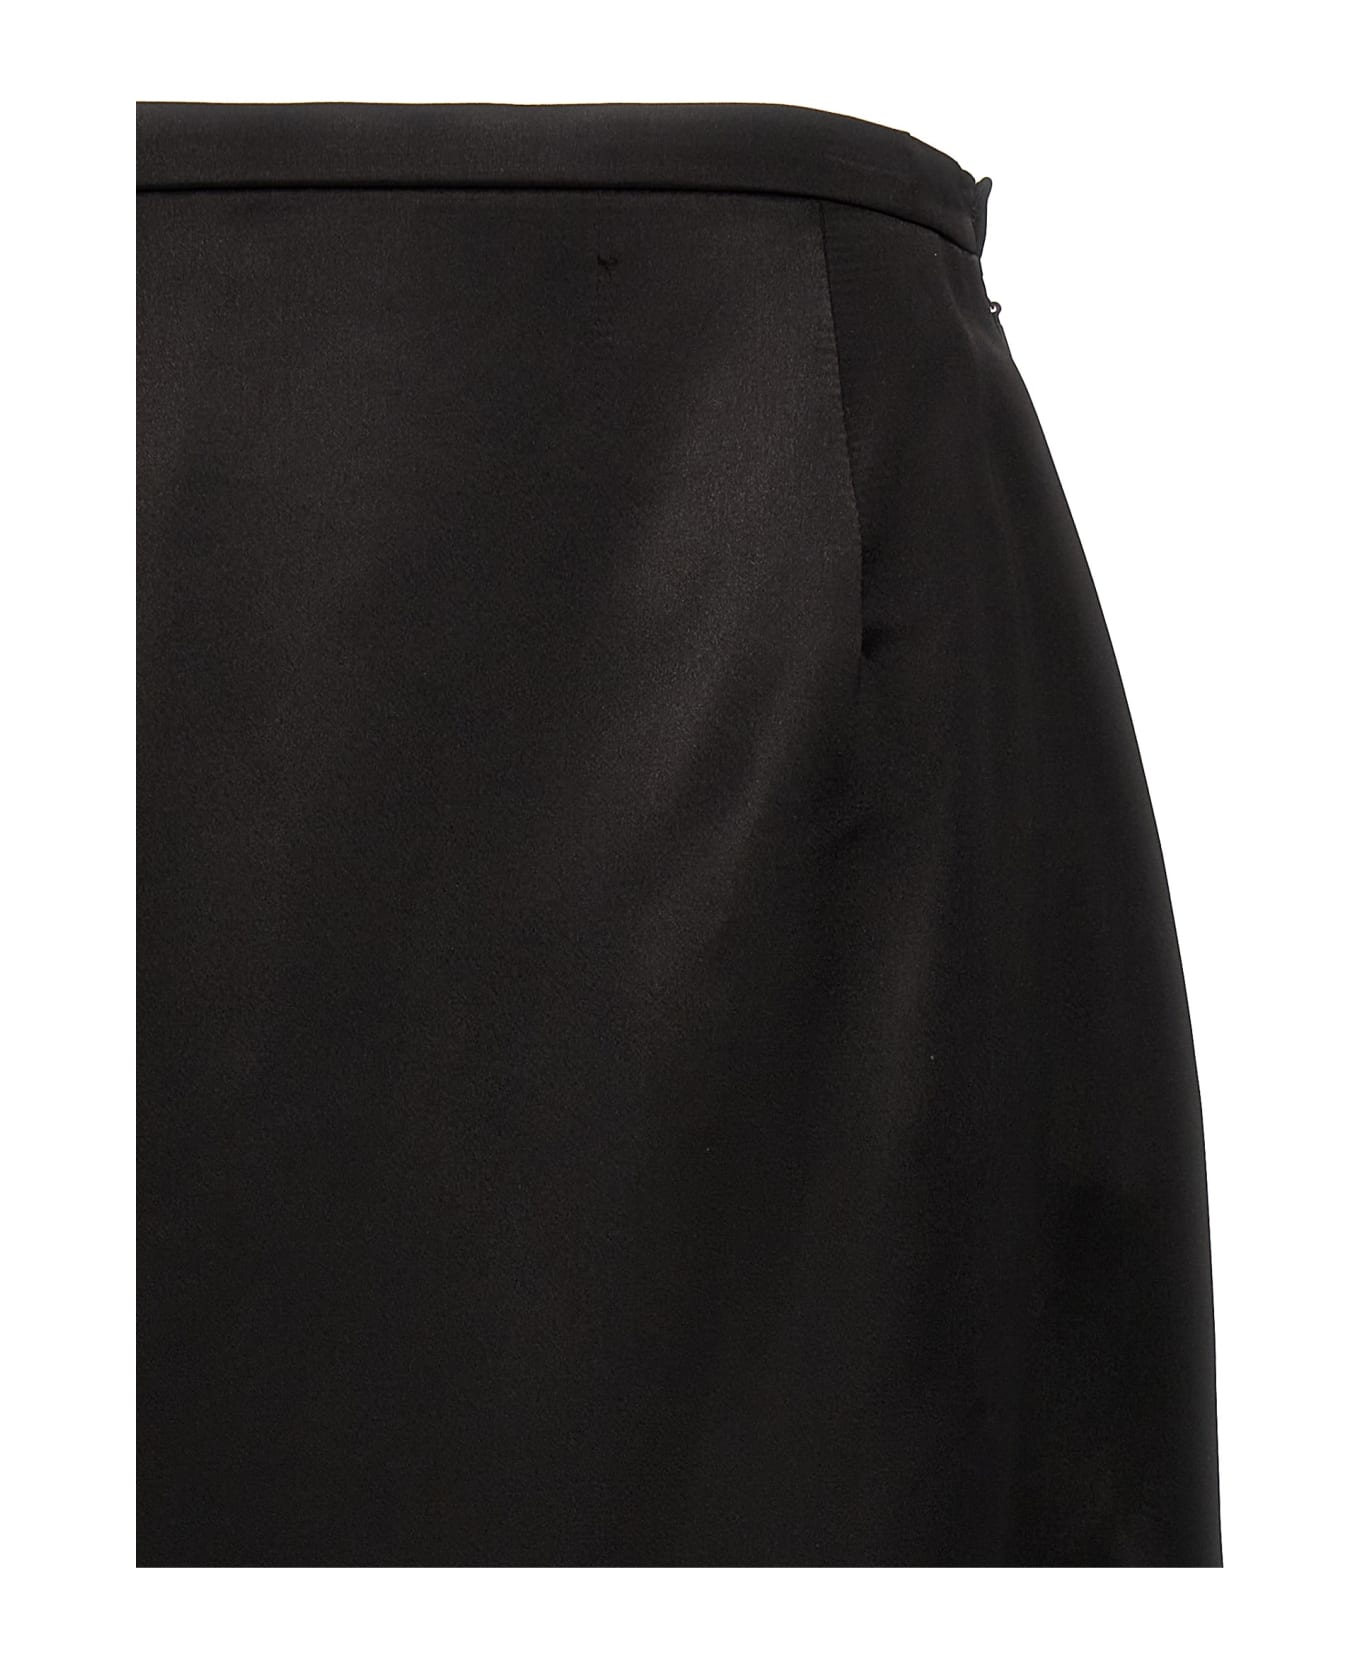 Saint Laurent Satin Pencil Skirt - Black